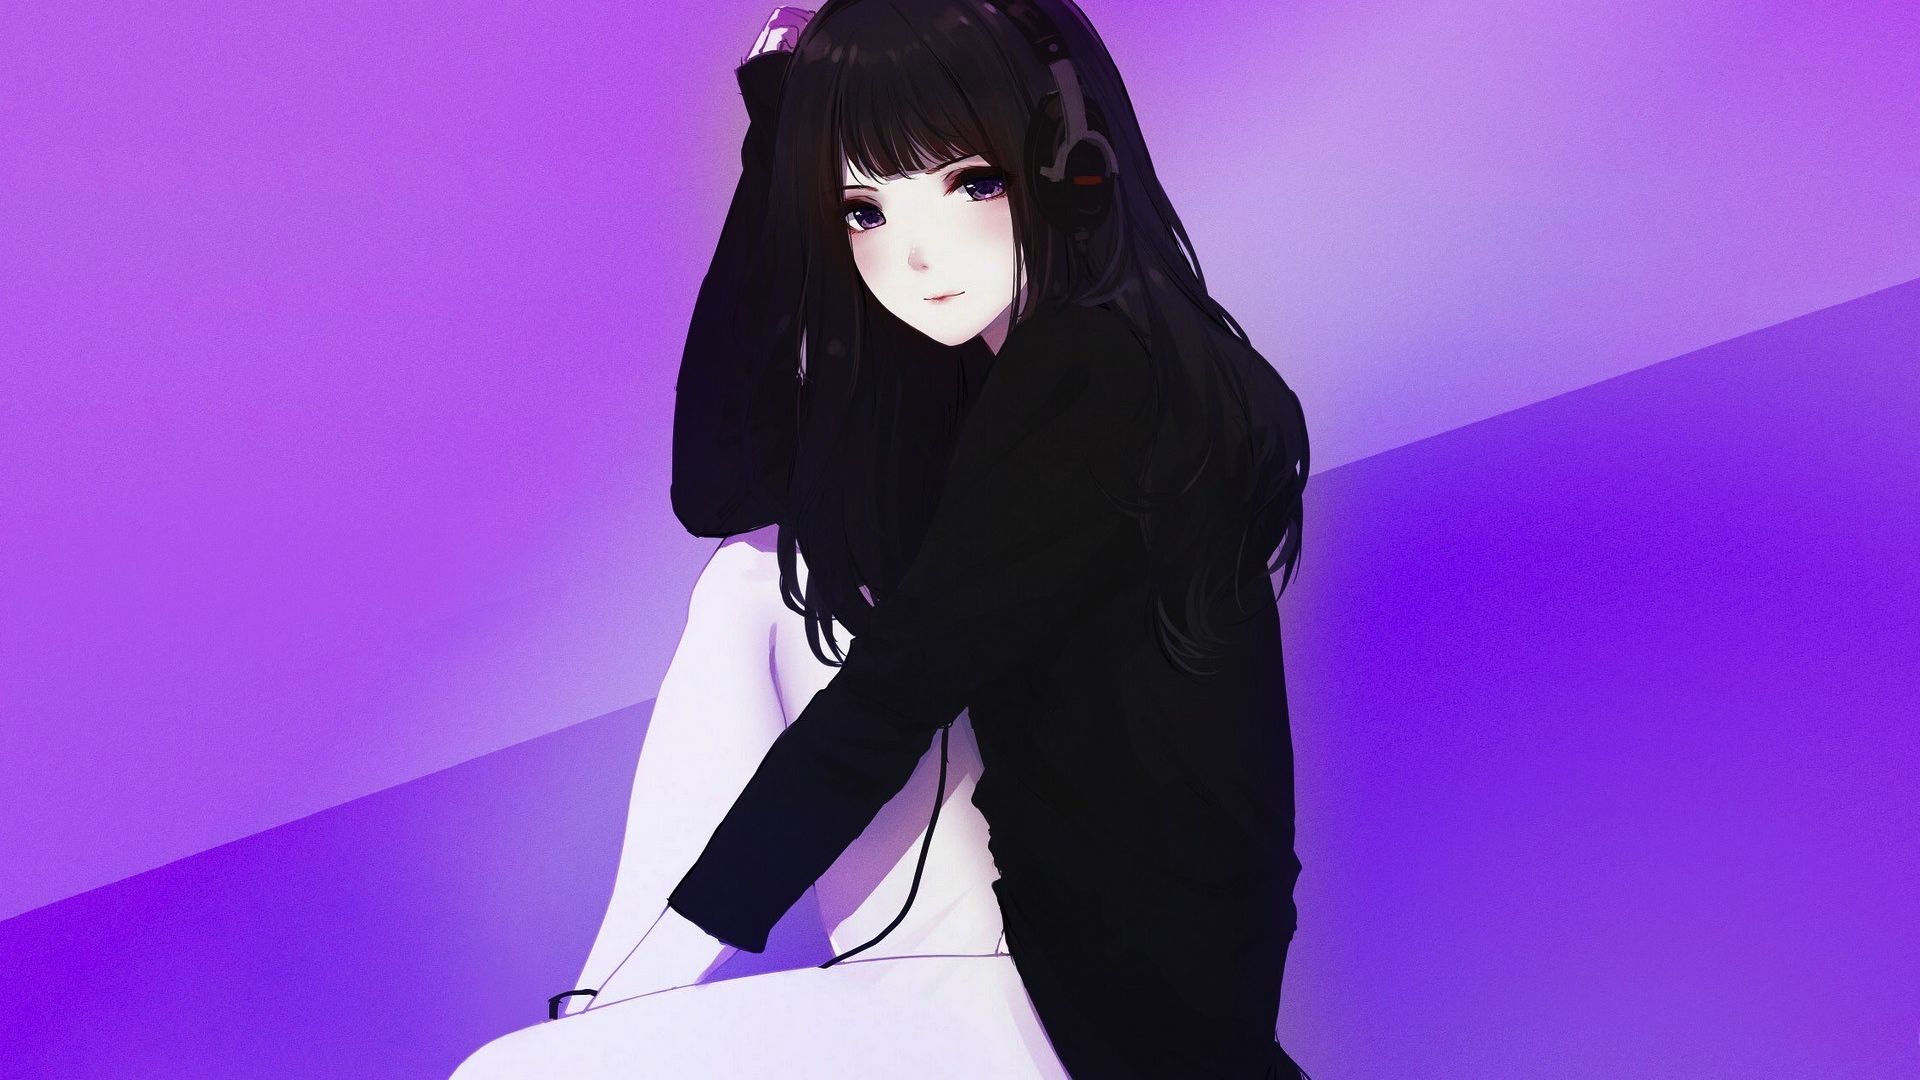 Desktop wallpaper headphone, cute, anime girl, black hoodie, HD image, picture, background, c095a4